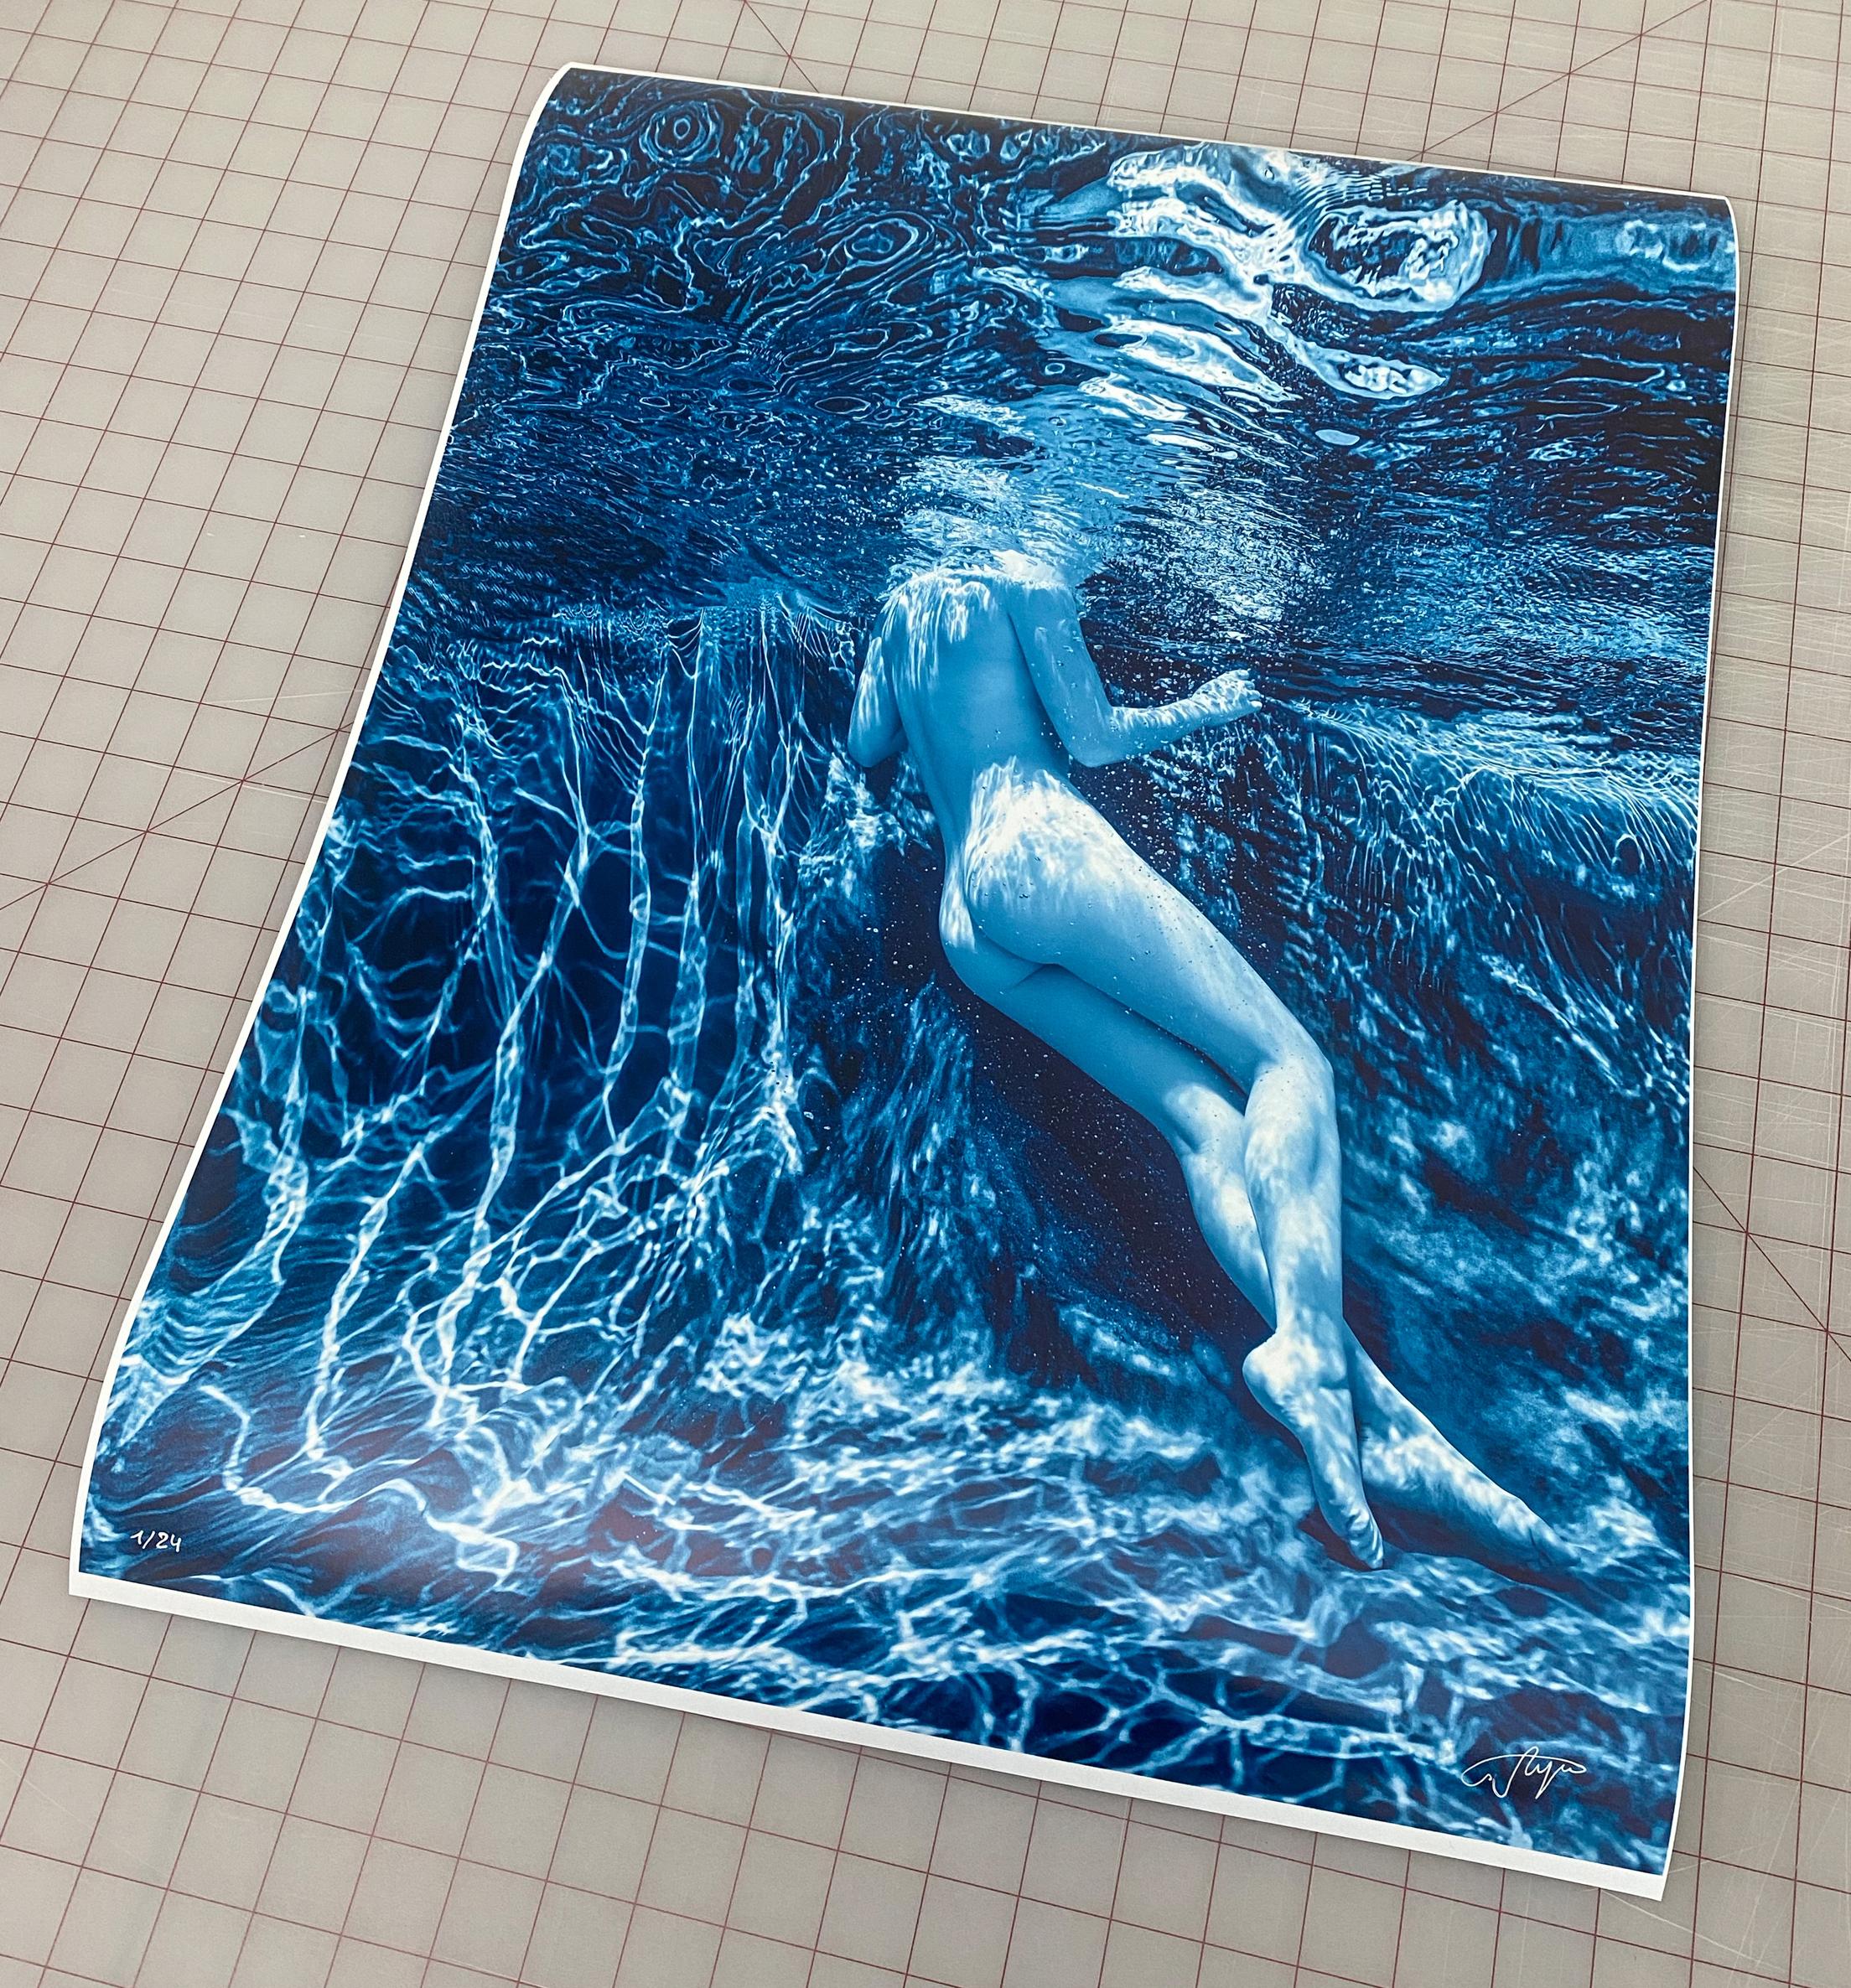 Moonlight IV - underwater nude photograph - archival pigment print 35x26